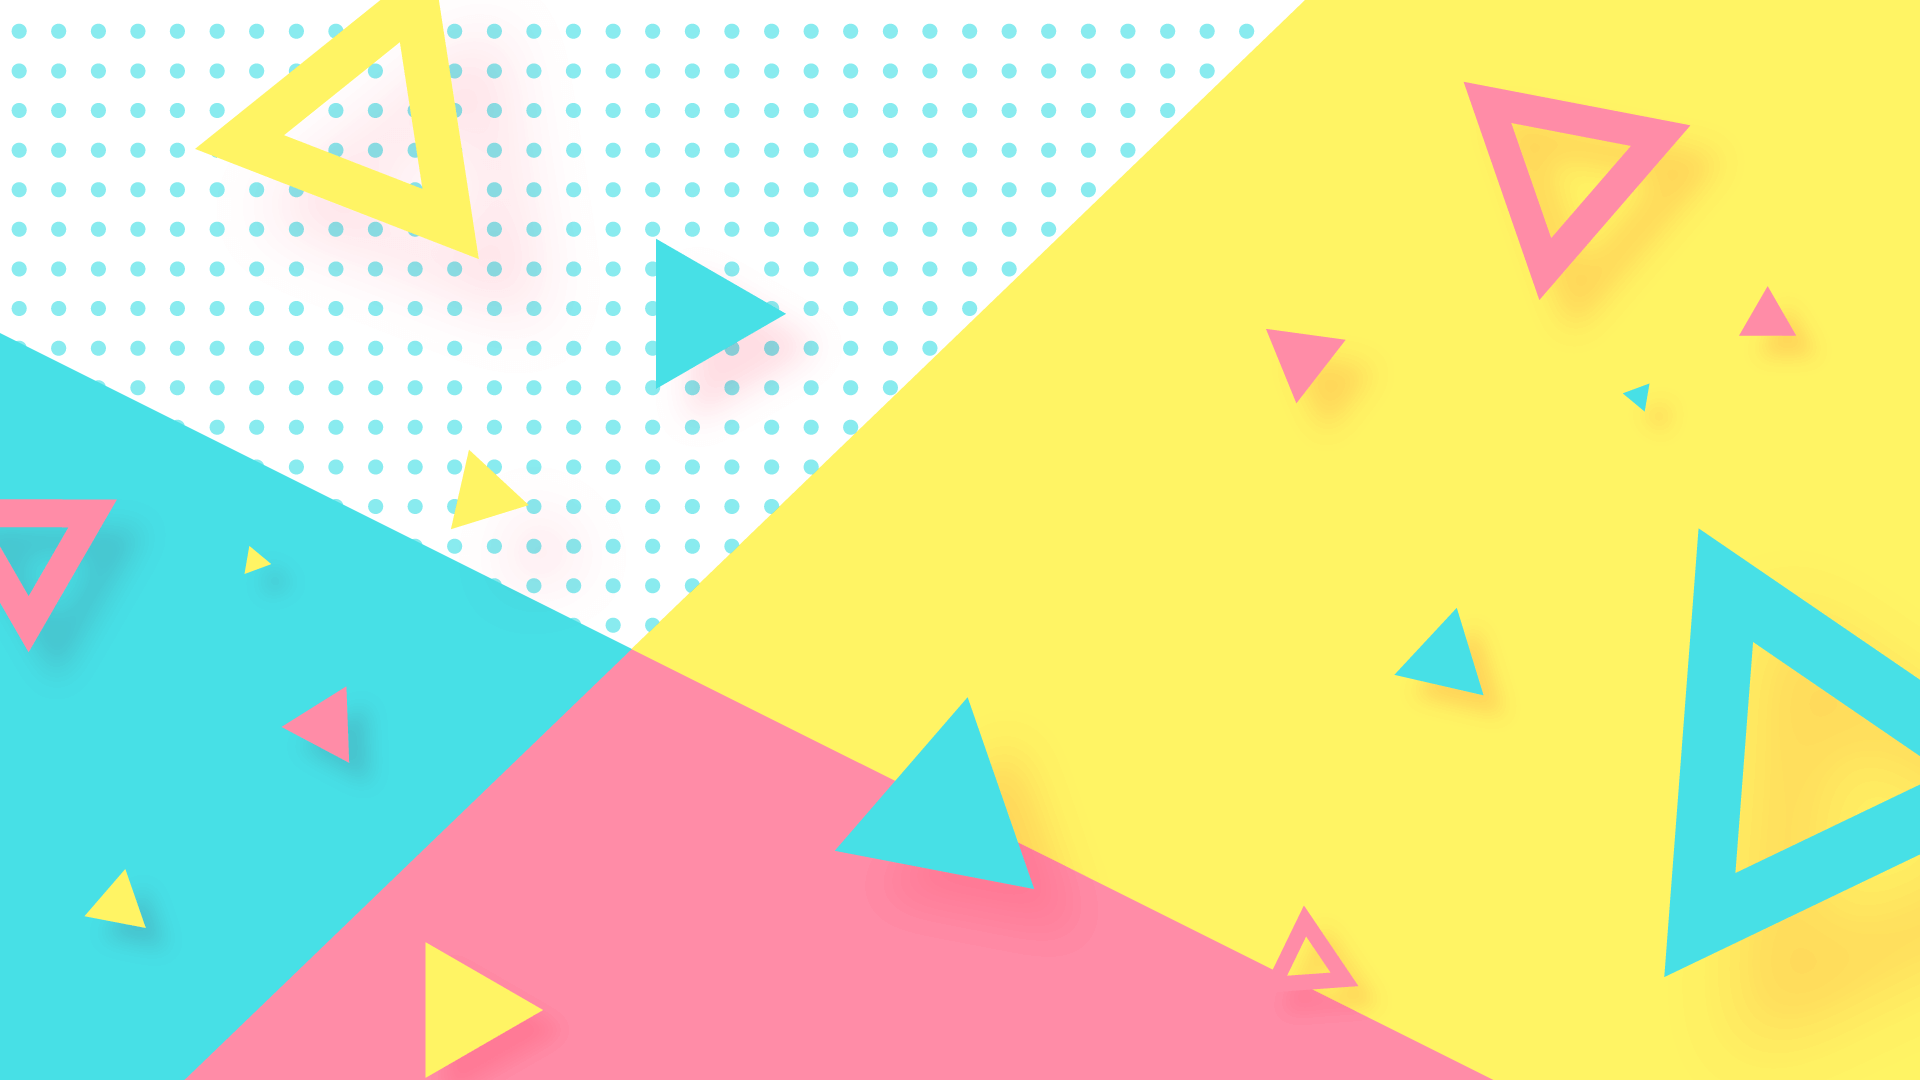 Okumono 背景 動画フリー素材 New パーティー トライアングル 10種 T Co Ckseyjkewb カラフルな切り替わりが目を惹く 三角を散りばめた背景素材です 回転させながら色パターン作成しているので それぞれ違った風に見えて楽しい